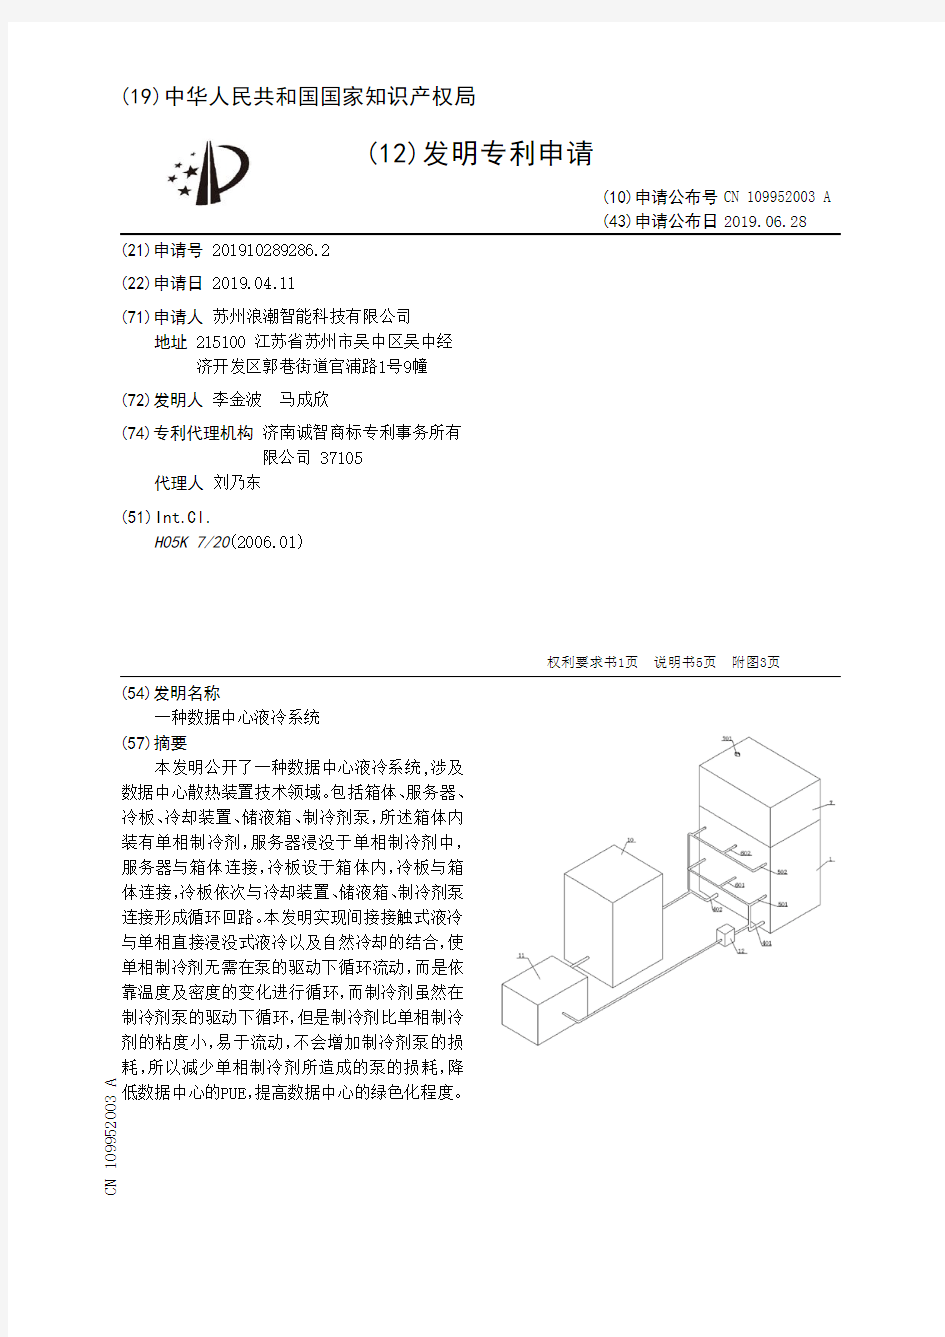 【CN109952003A】一种数据中心液冷系统【专利】